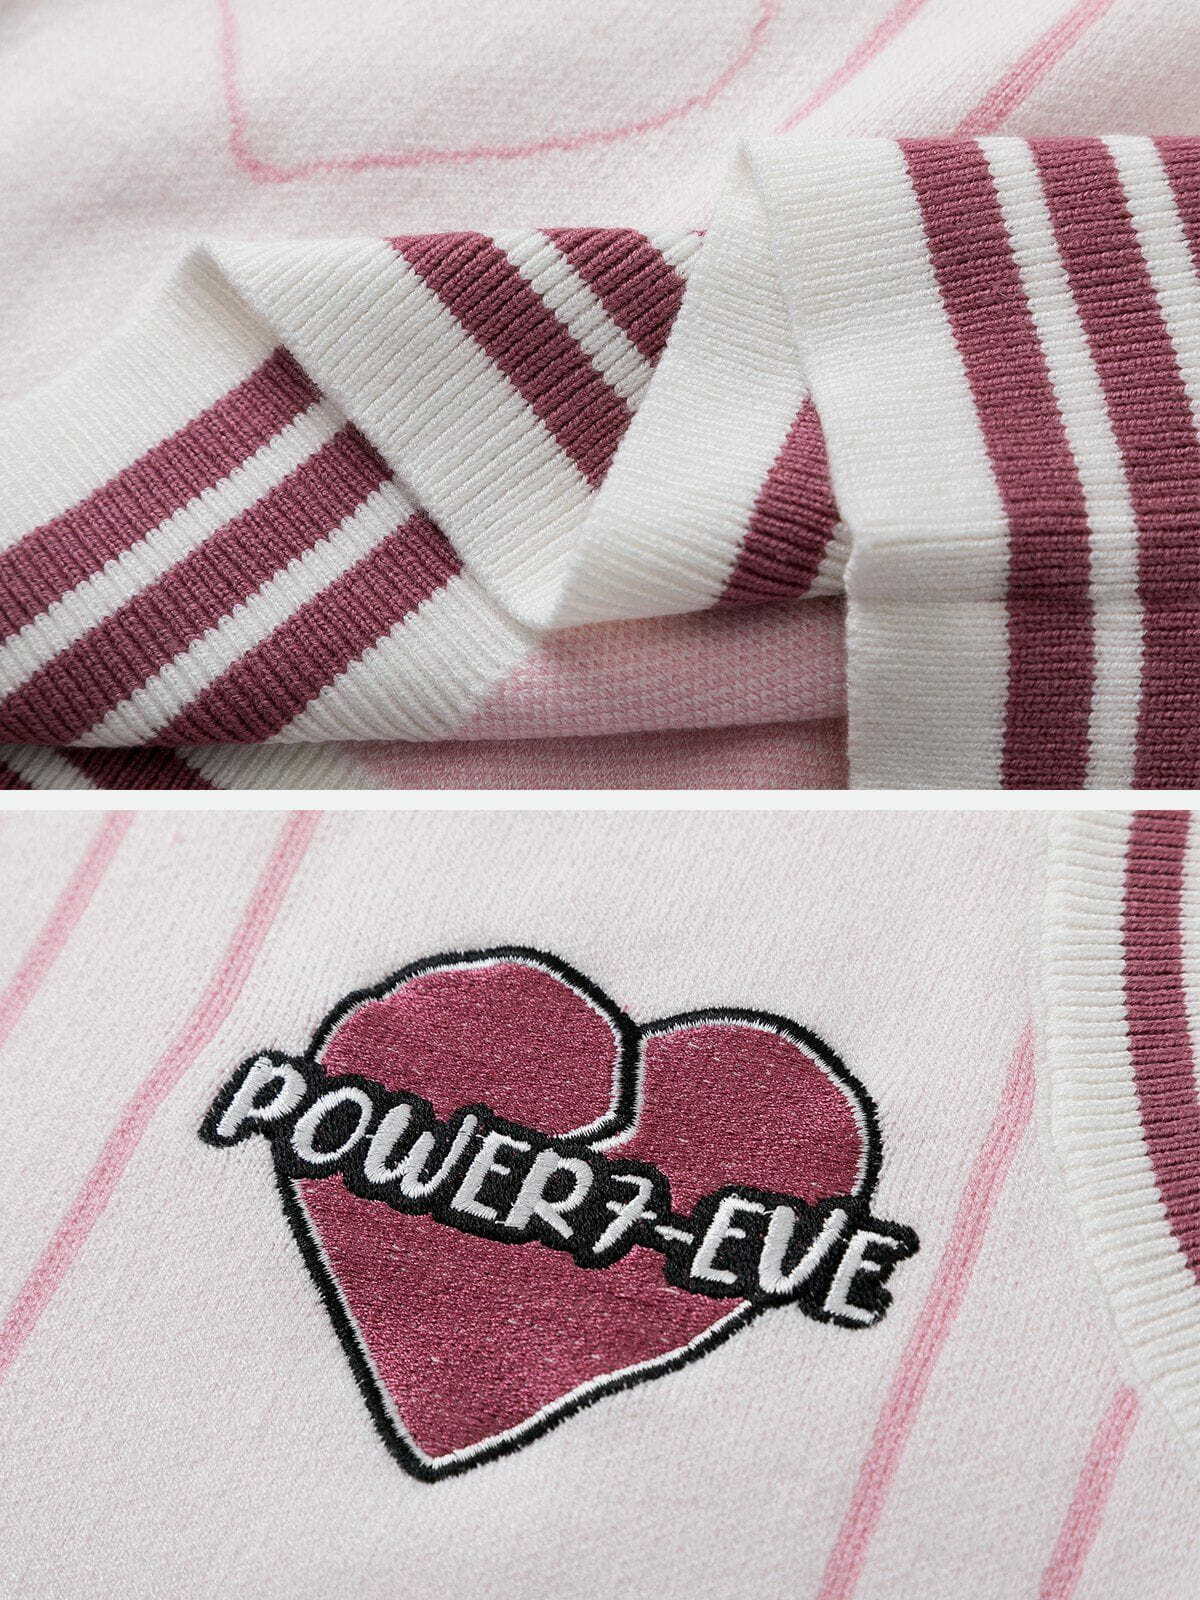 colorblock heart sweater vest edgy & vibrant streetwear 5638